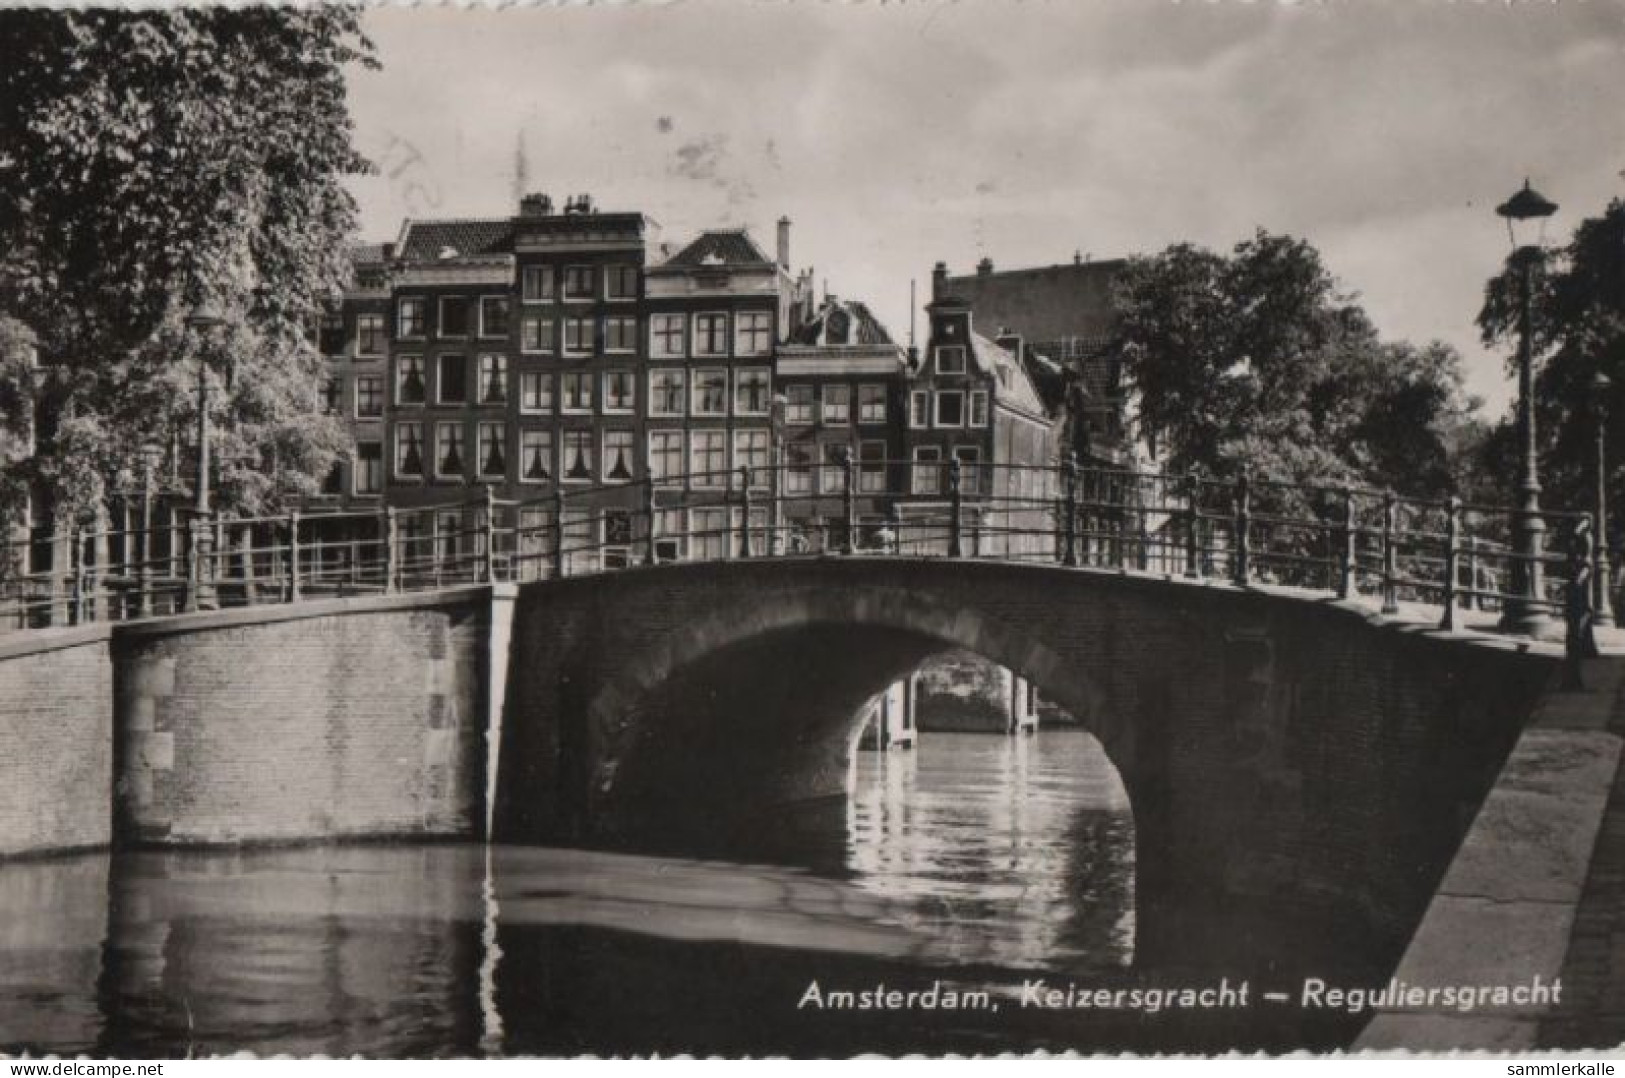 69634 - Niederlande - Amsterdam - Keizersgracht, Reguliersgracht - 1959 - Amsterdam